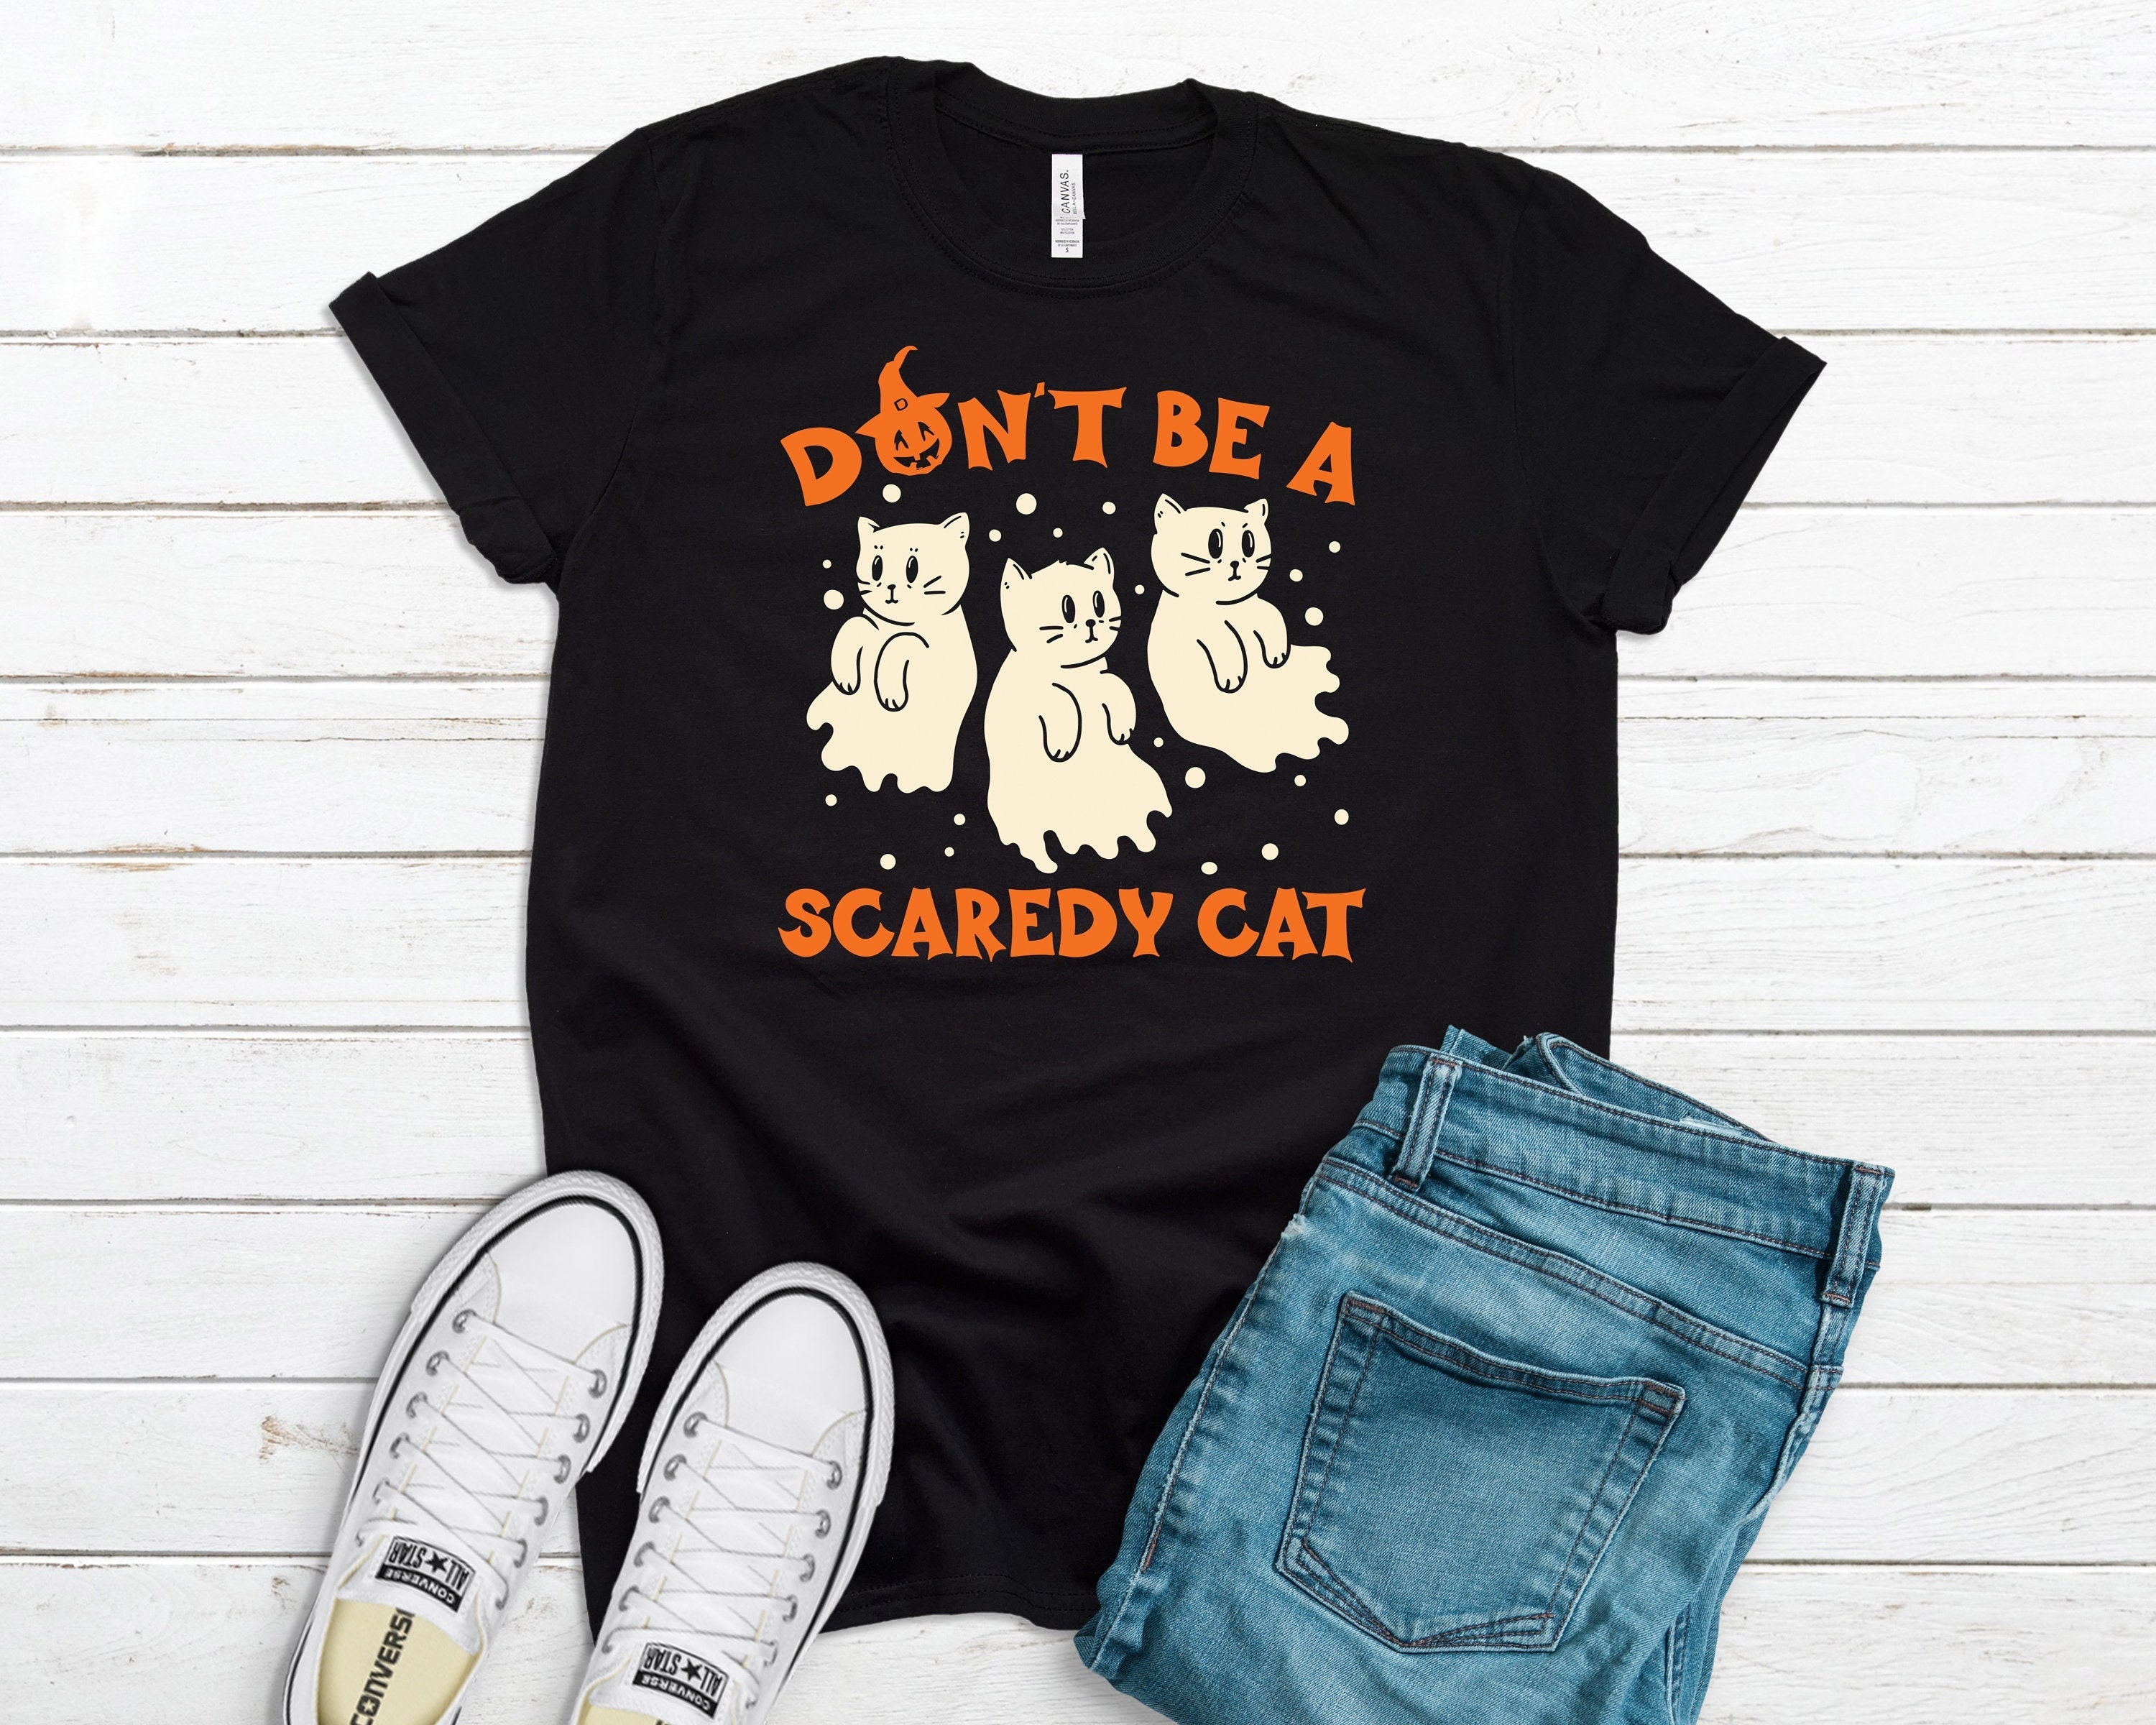 Space Cat Unisex Kids Raglan T-Shirt. White/Black Triblend 3/4 length  baseball kids tee. Shirt for Boys and Girls